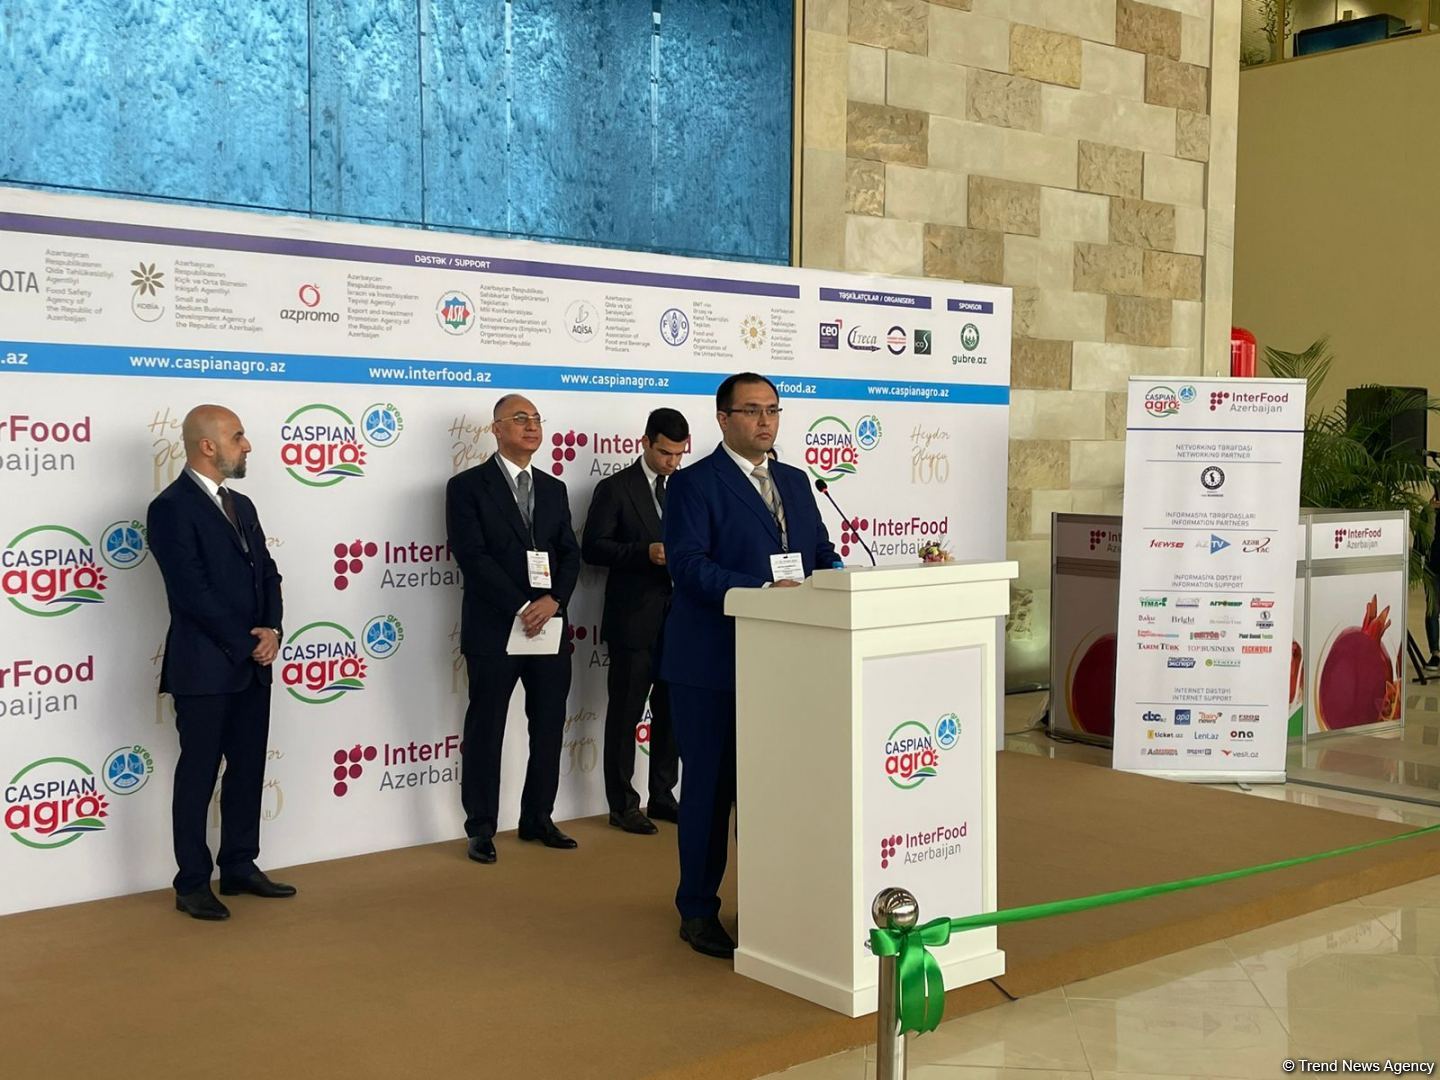 Vast majority of Caspian Agro exhibitors are international companies - minister